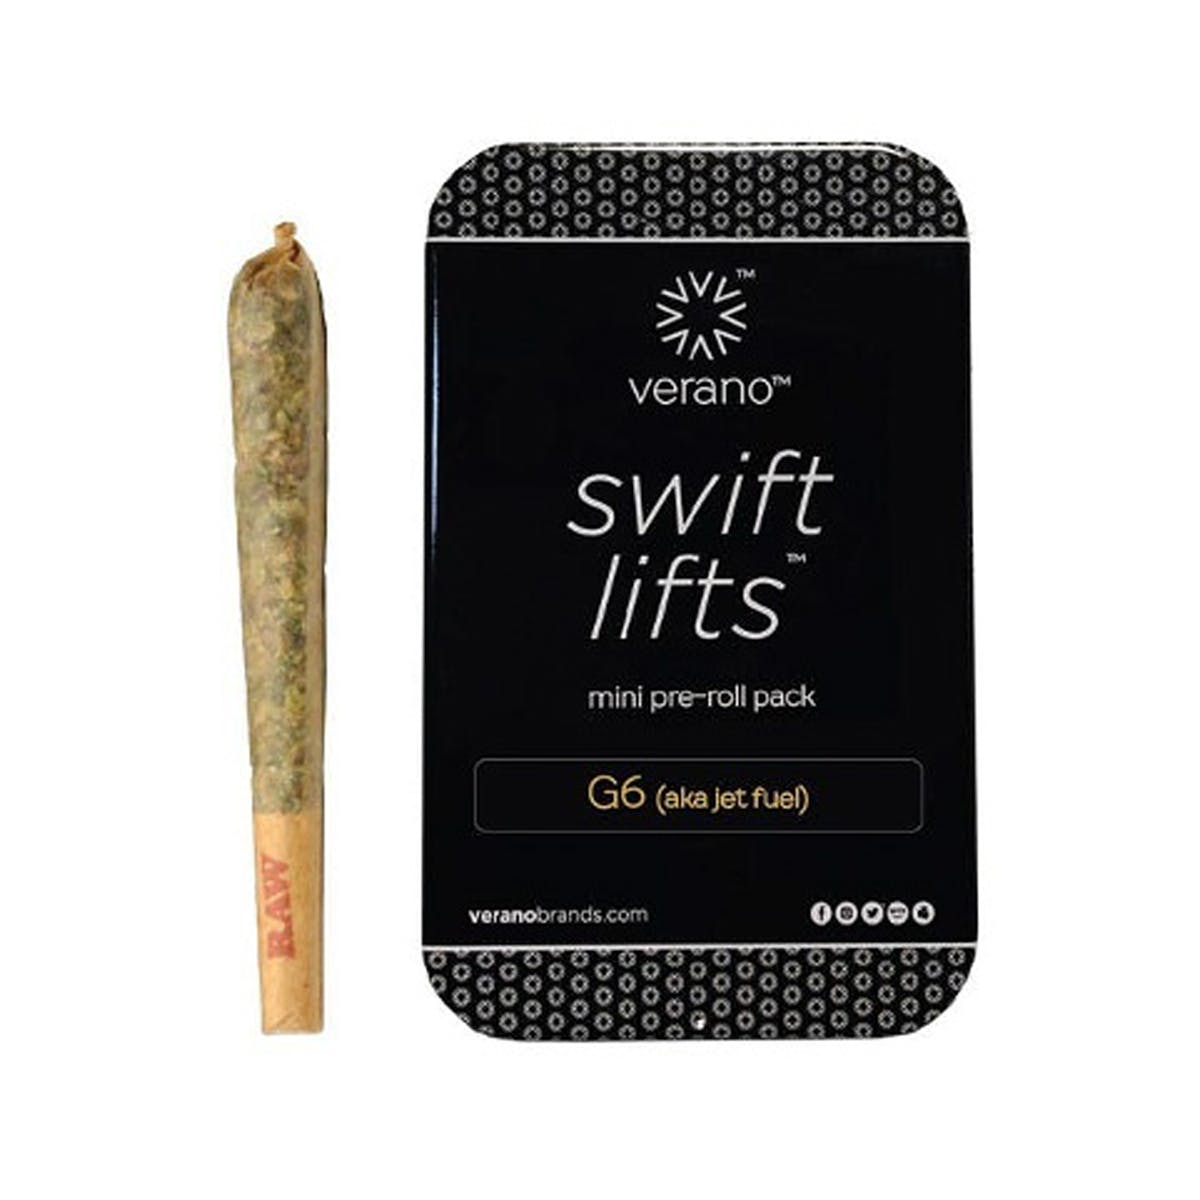 marijuana-dispensaries-herbafi-in-silver-spring-swift-liftsa-c2-84c-mini-pre-roll-pack-g6-jet-fuel